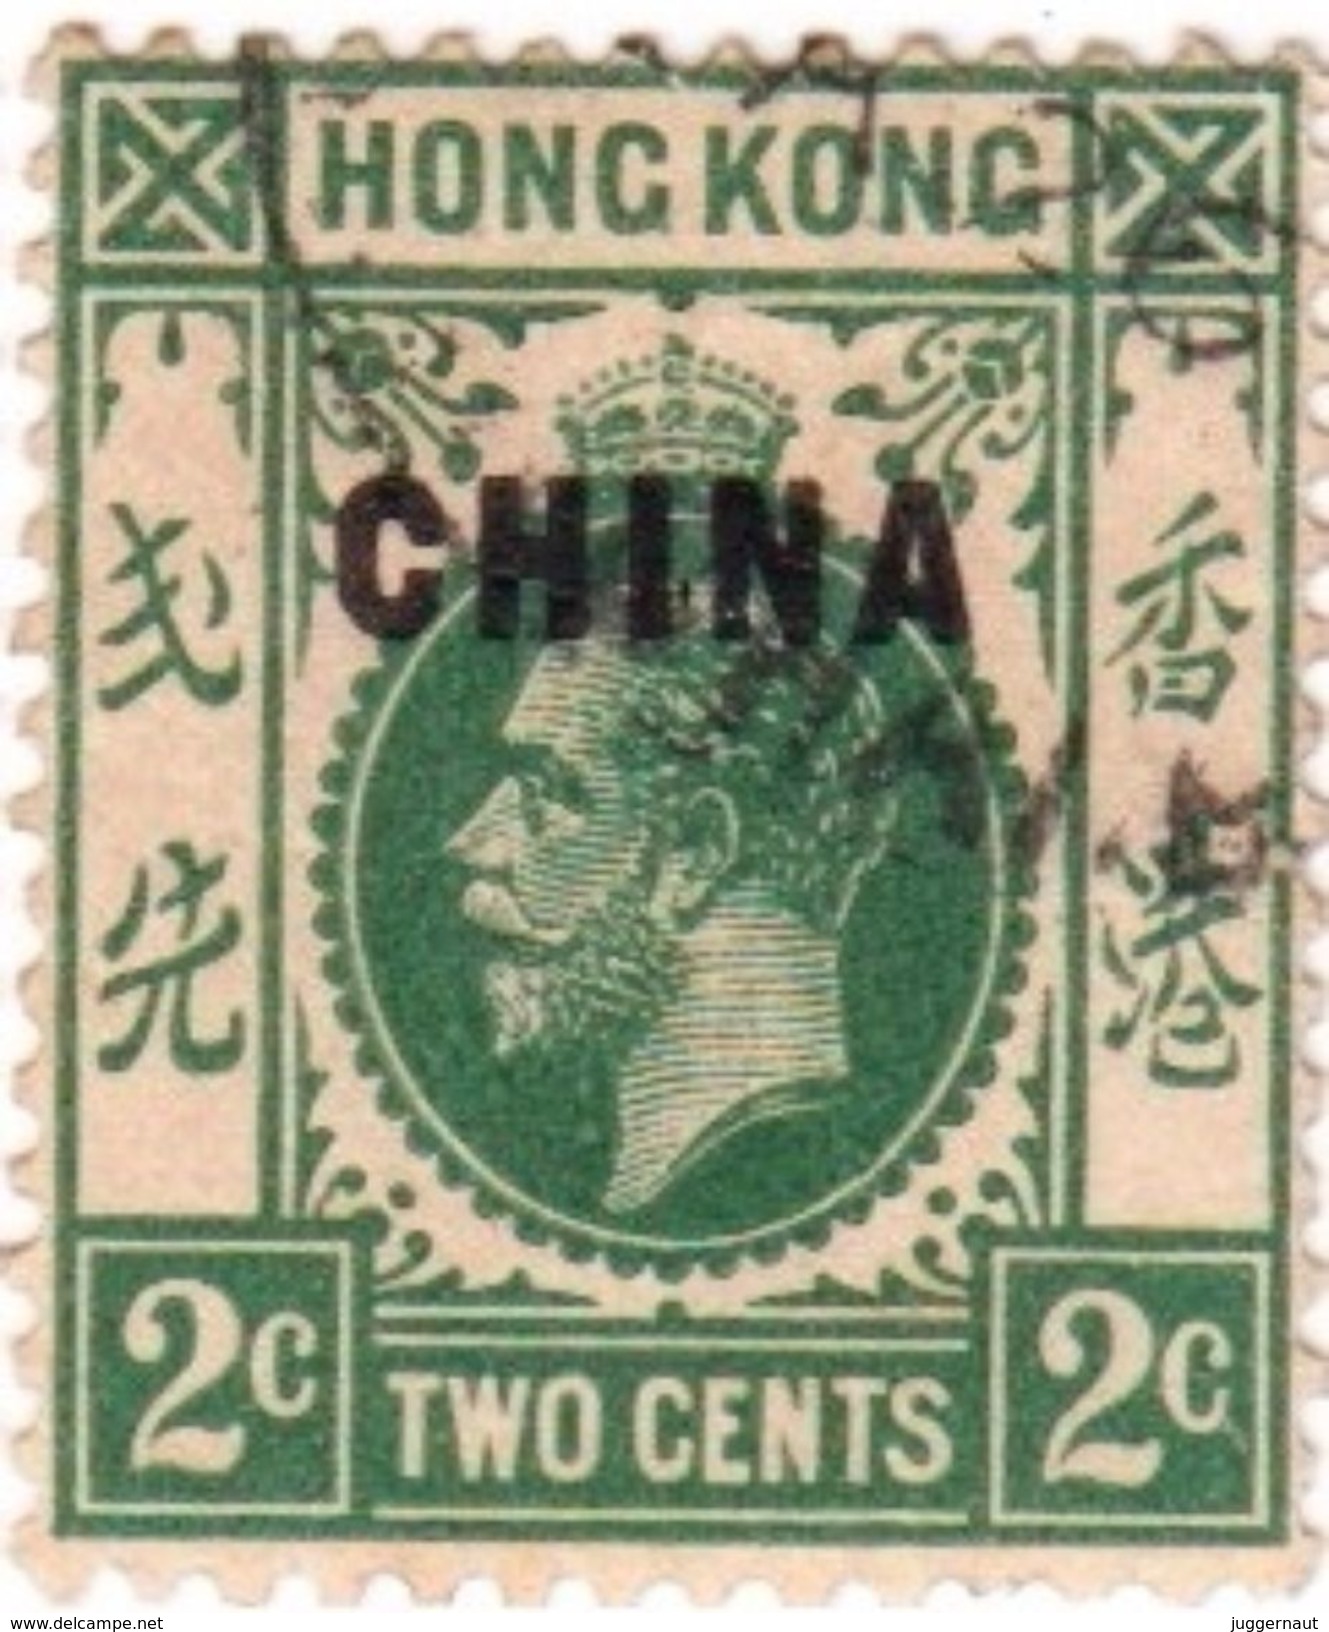 BRITISH HONG KONG CHINA OVERPRINT 2-CENTS POSTAGE STAMP 1917 USED/GOOD - Oblitérés